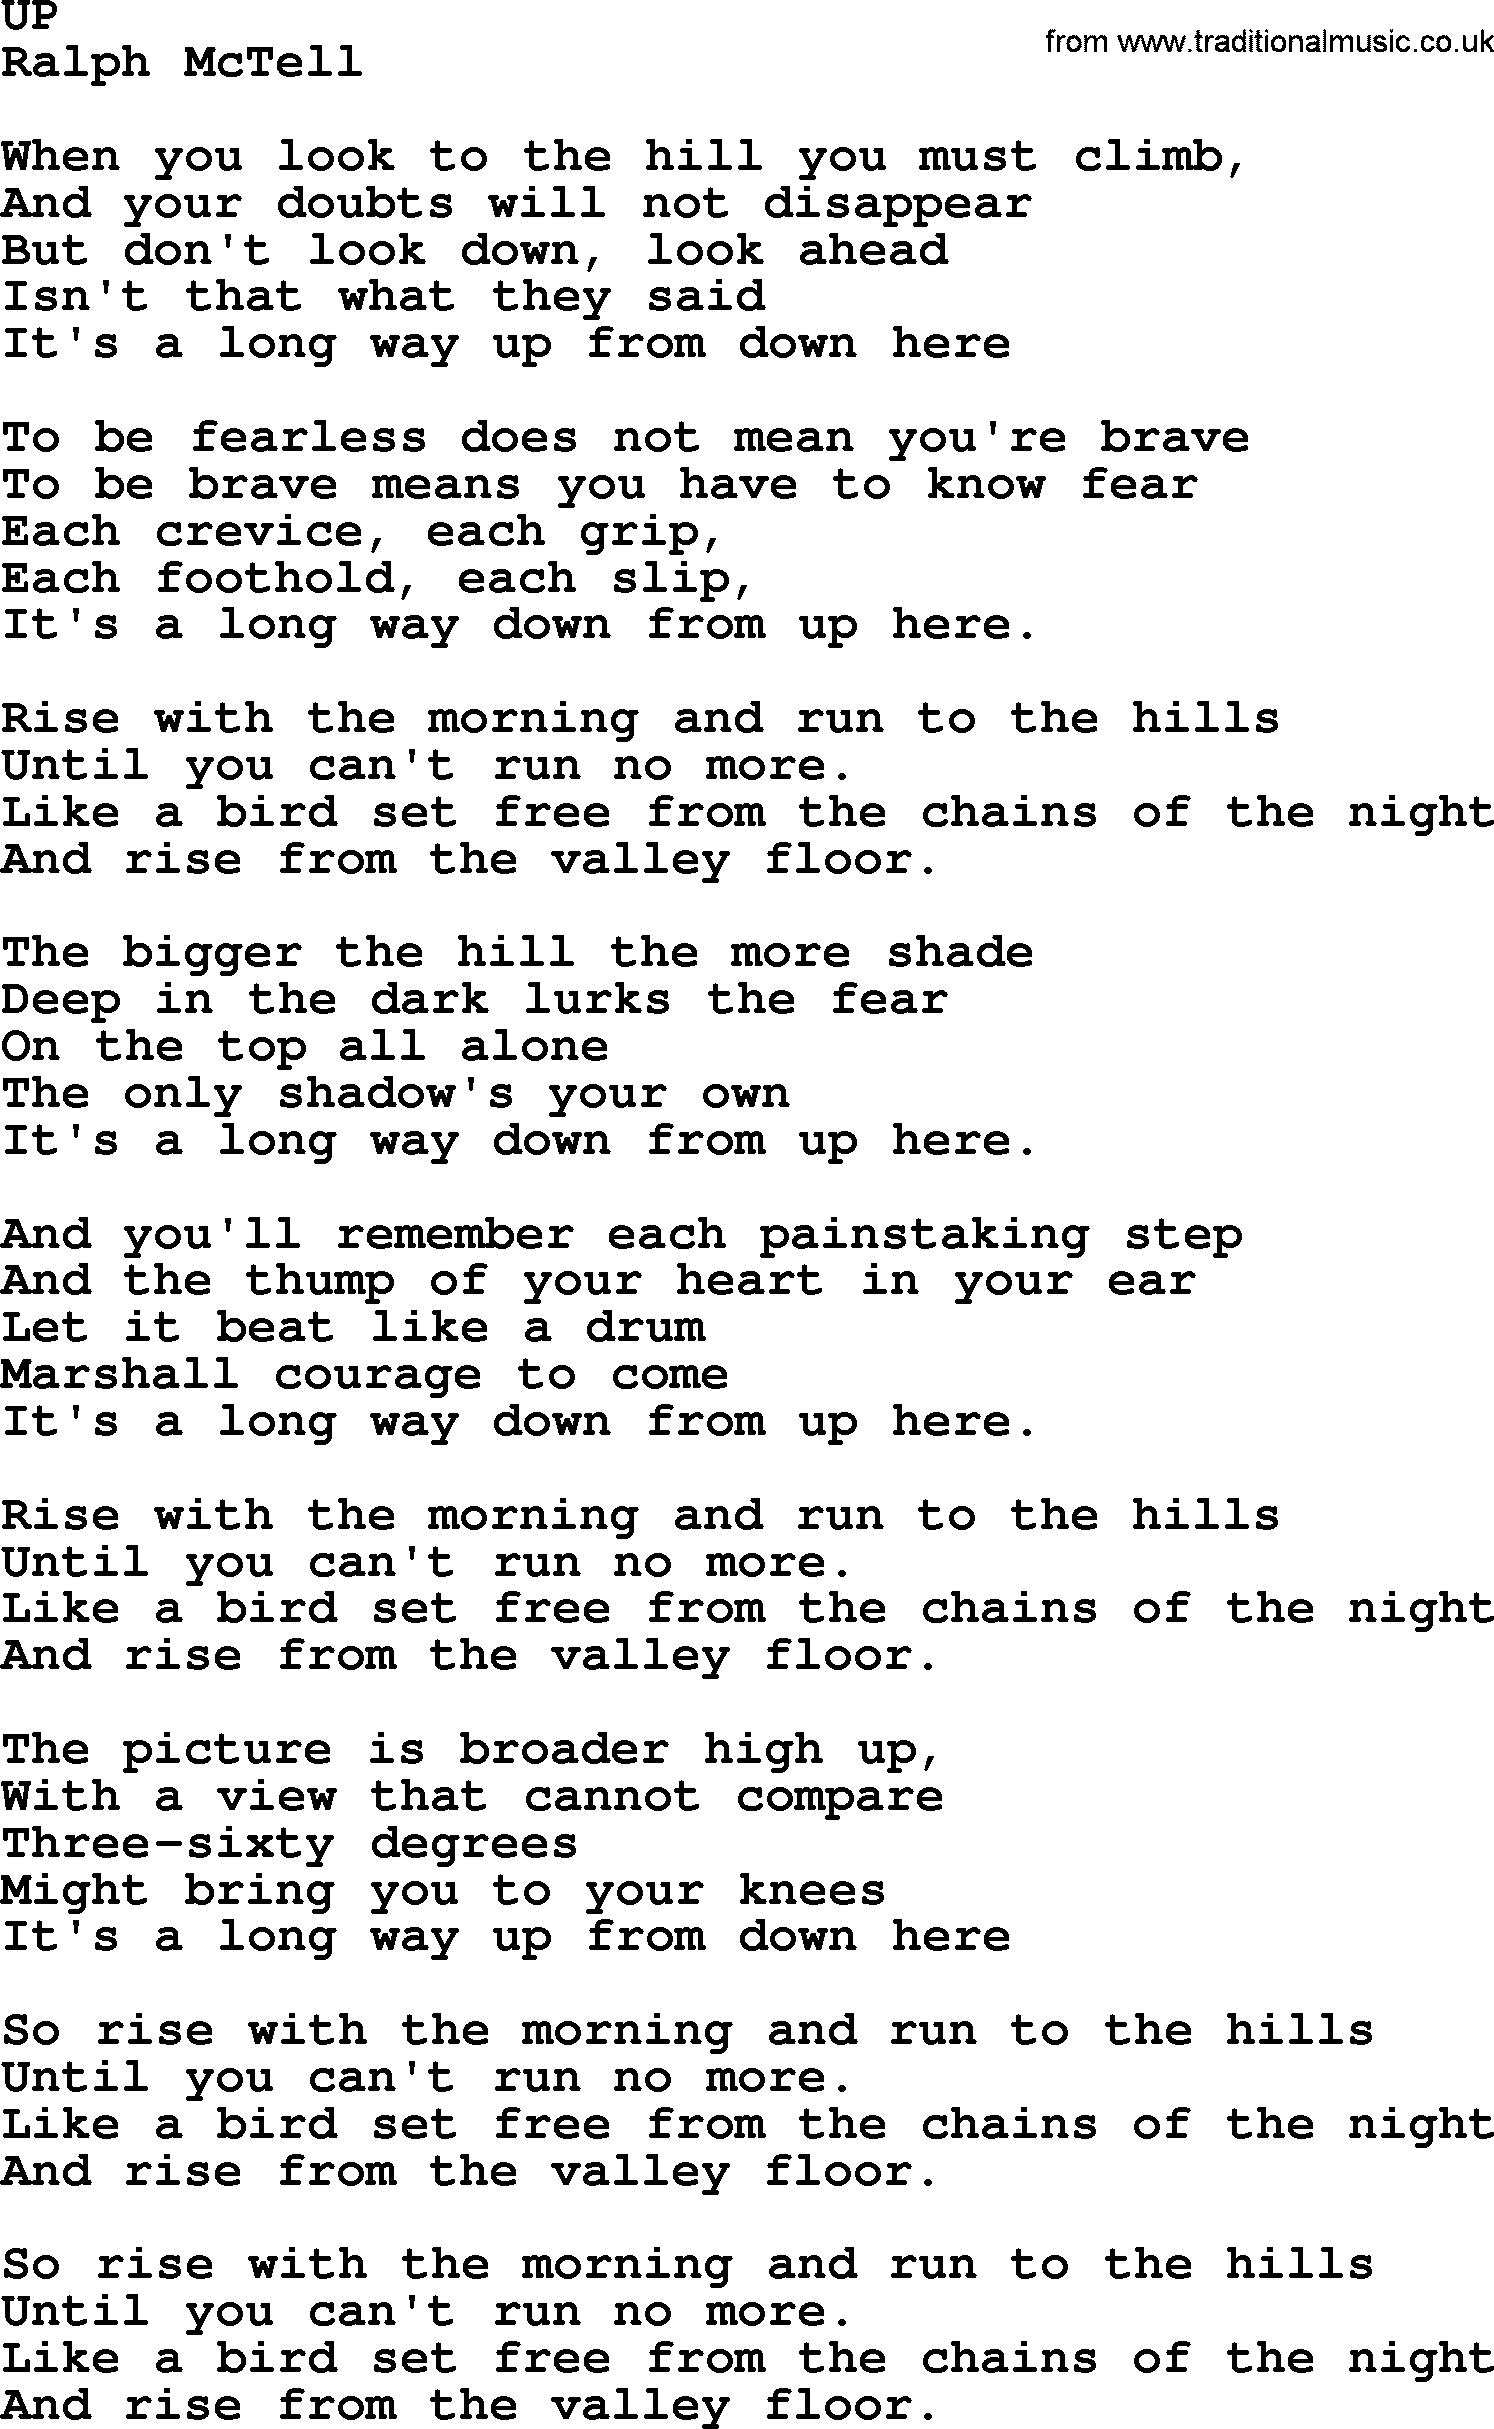 Ralph McTell Song: Up, lyrics